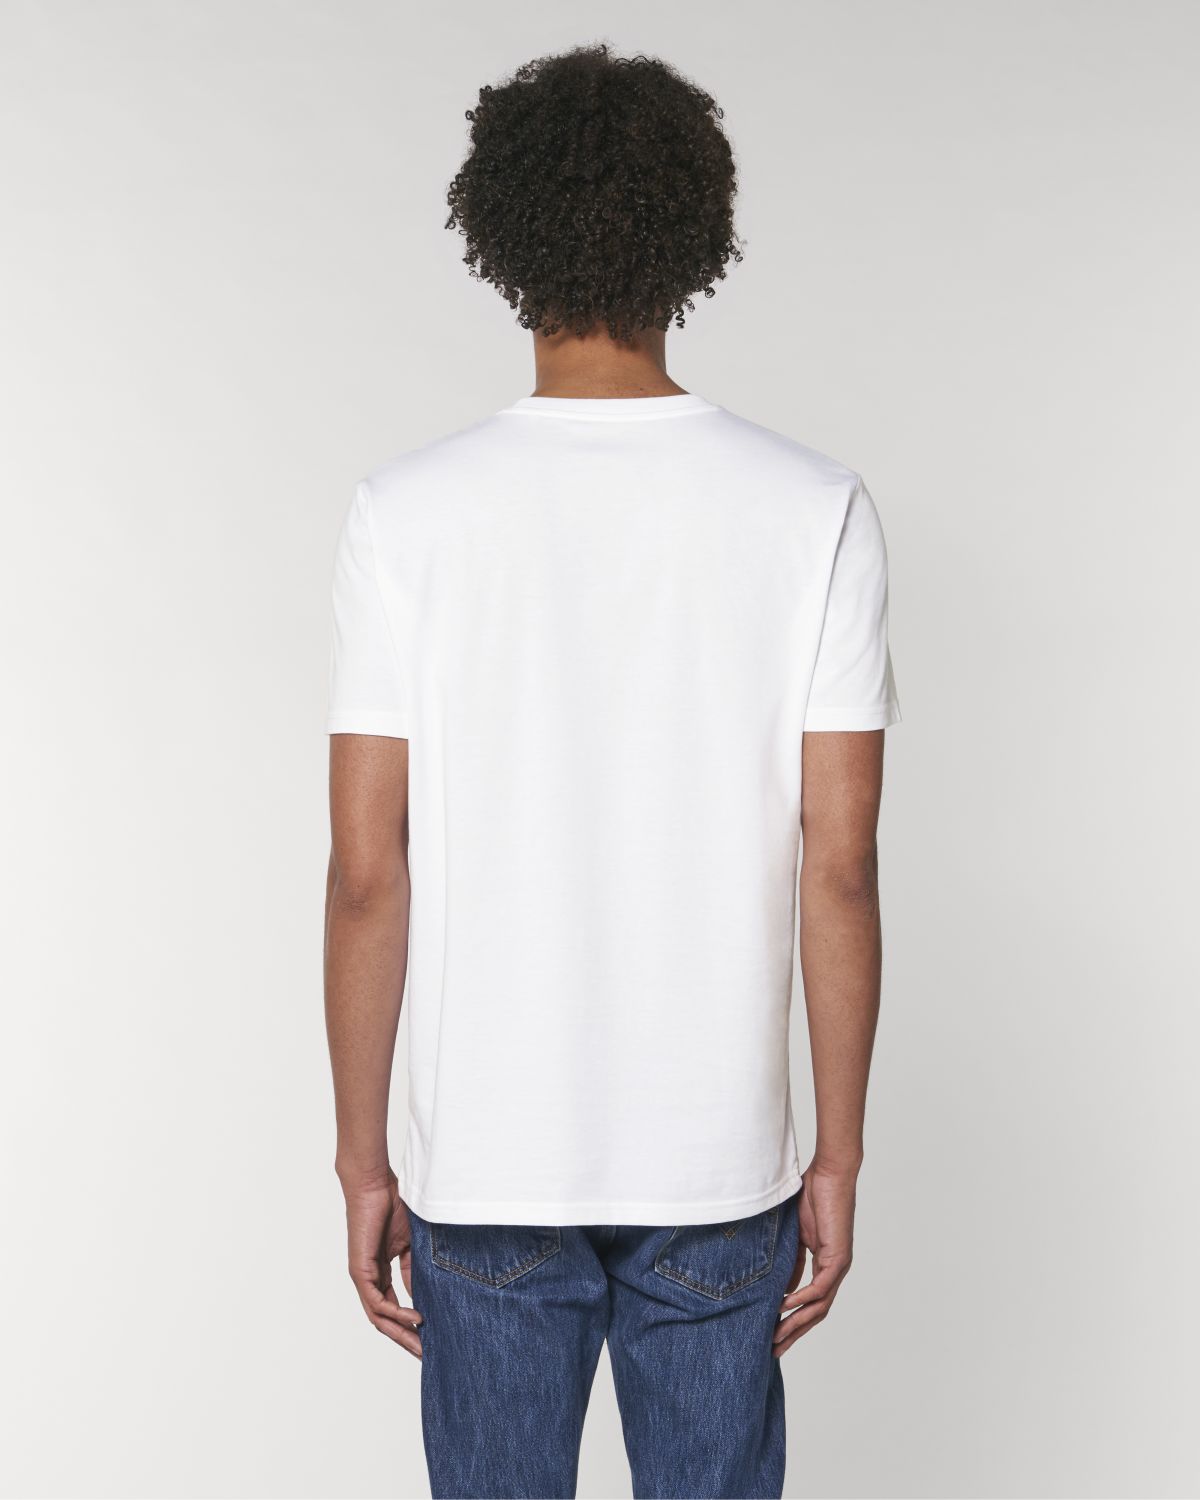 T-Shirt Homme IMMORTAL Blanc - DP